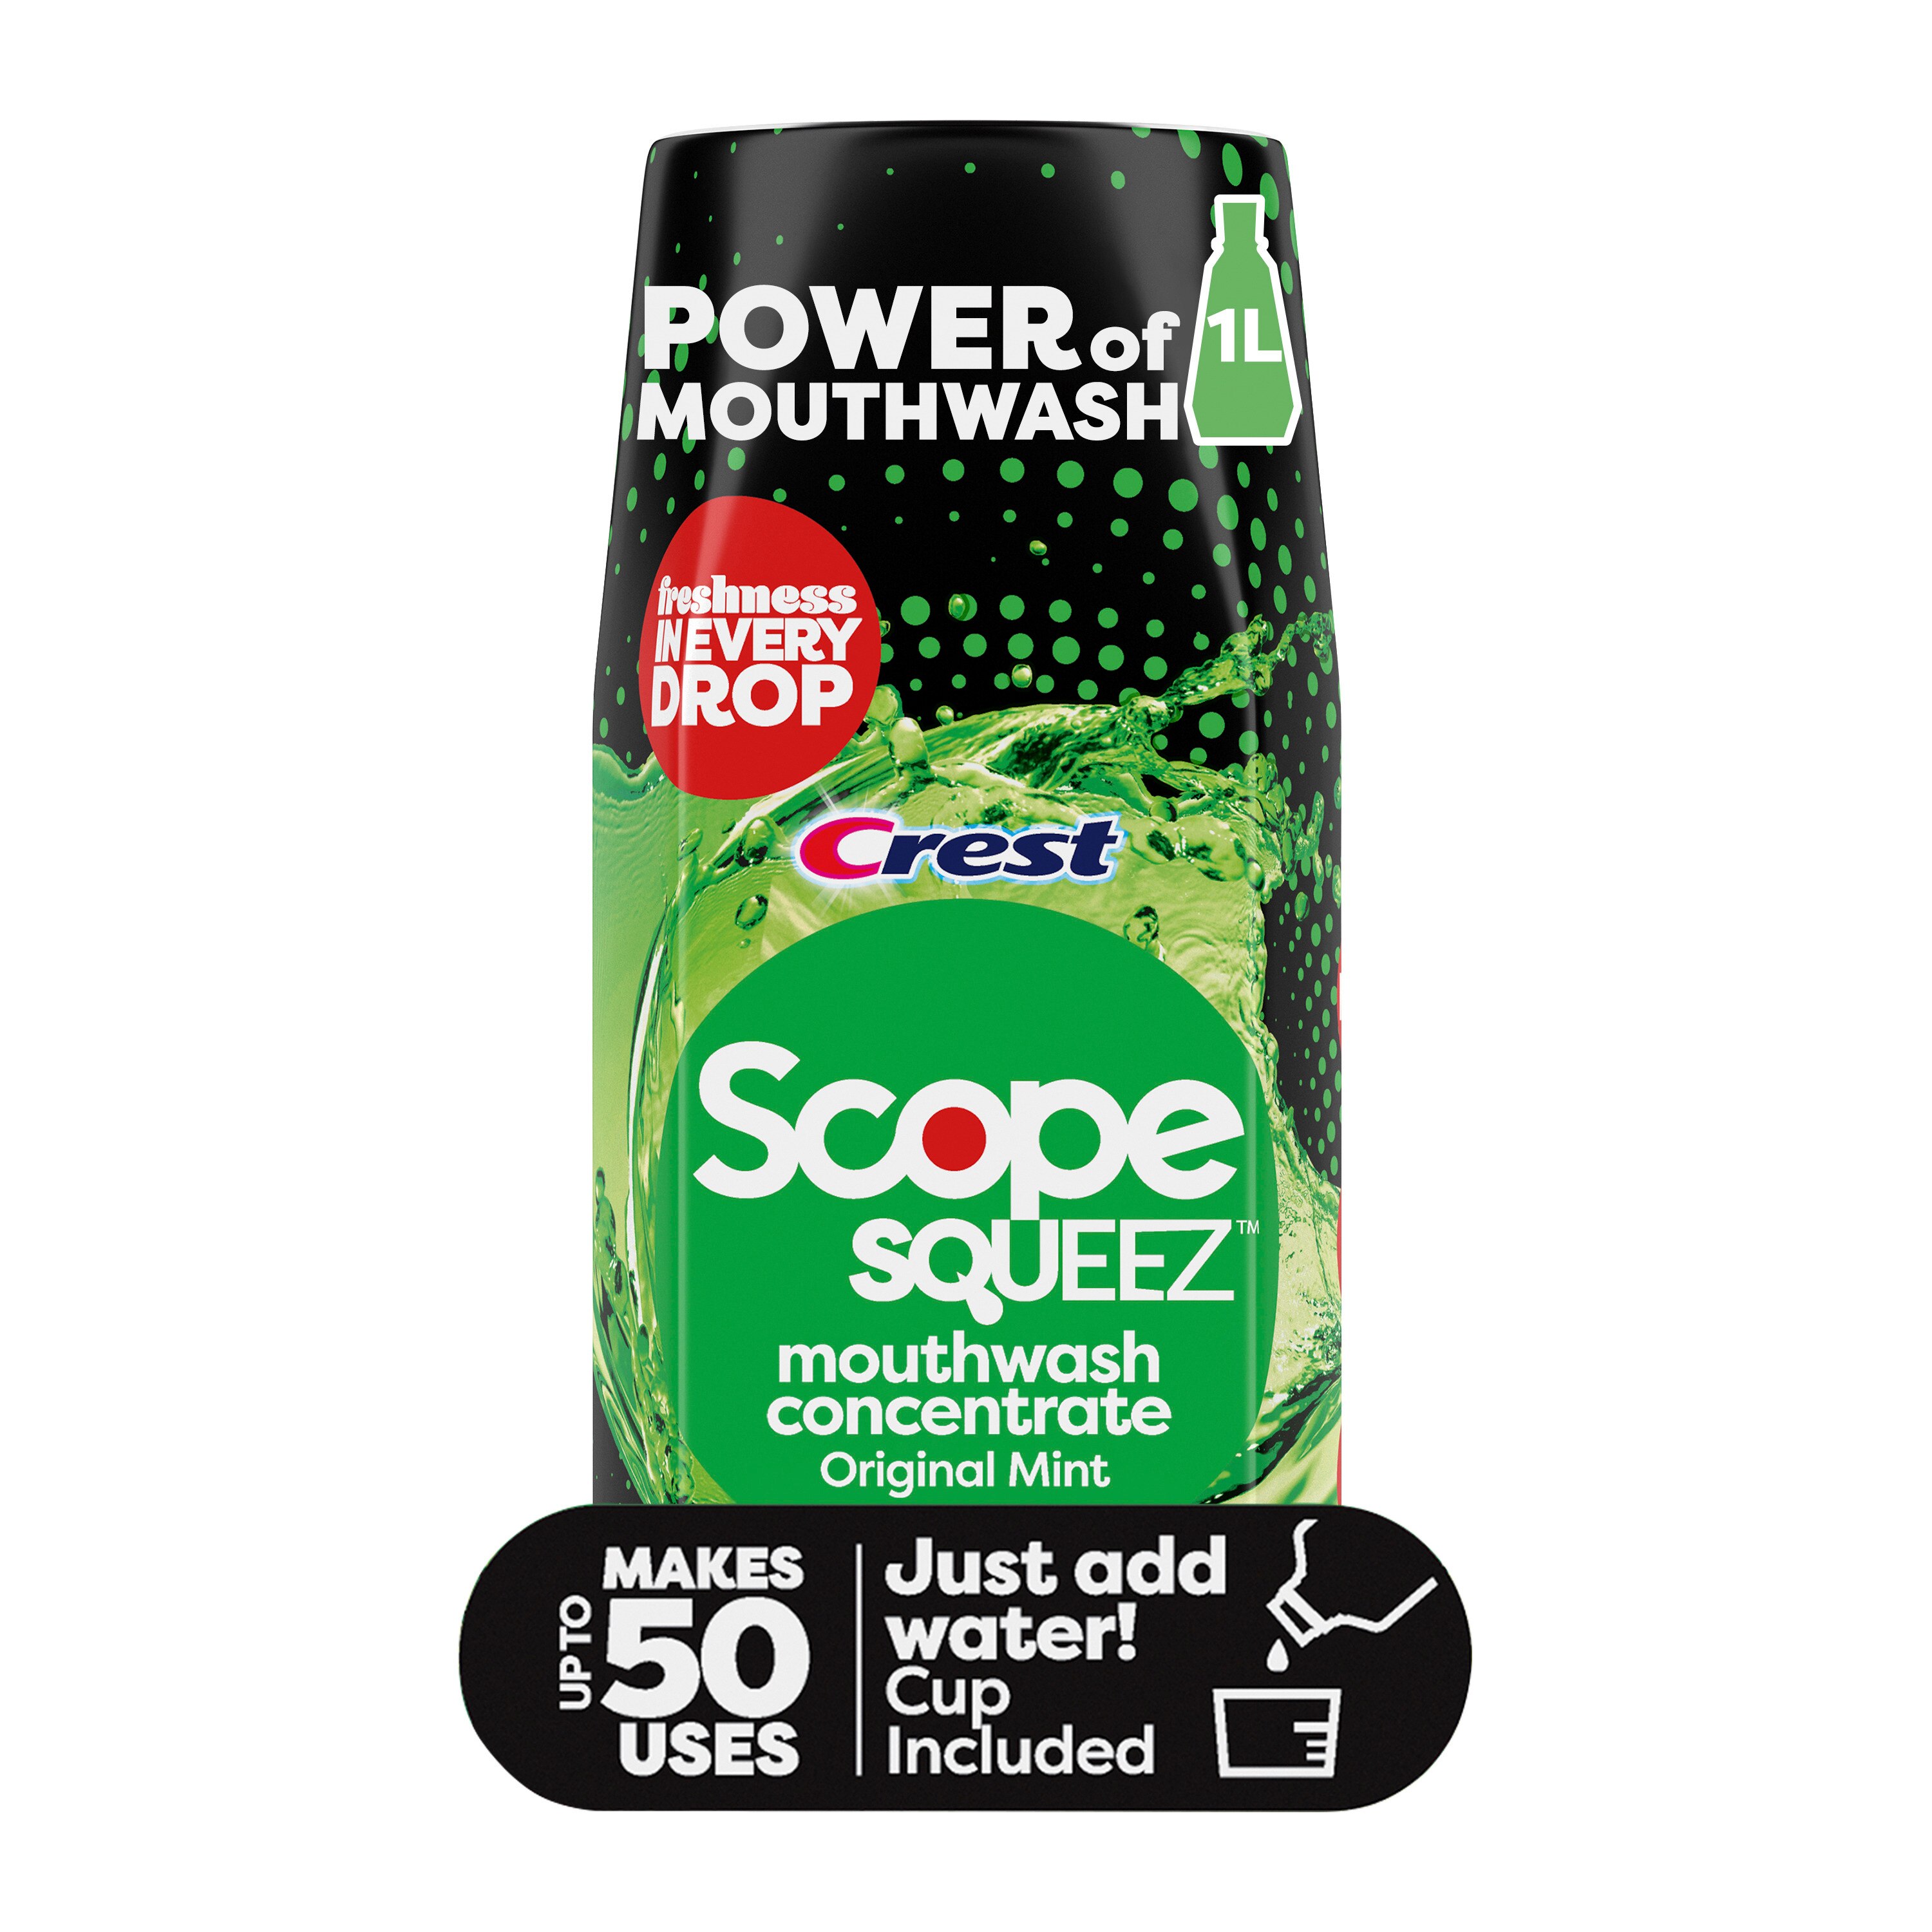 Scope Squeez Mouthwash Concentrate, 50 Ml Makes Up To 50 Uses, Original Mint - 1.69 Oz , CVS